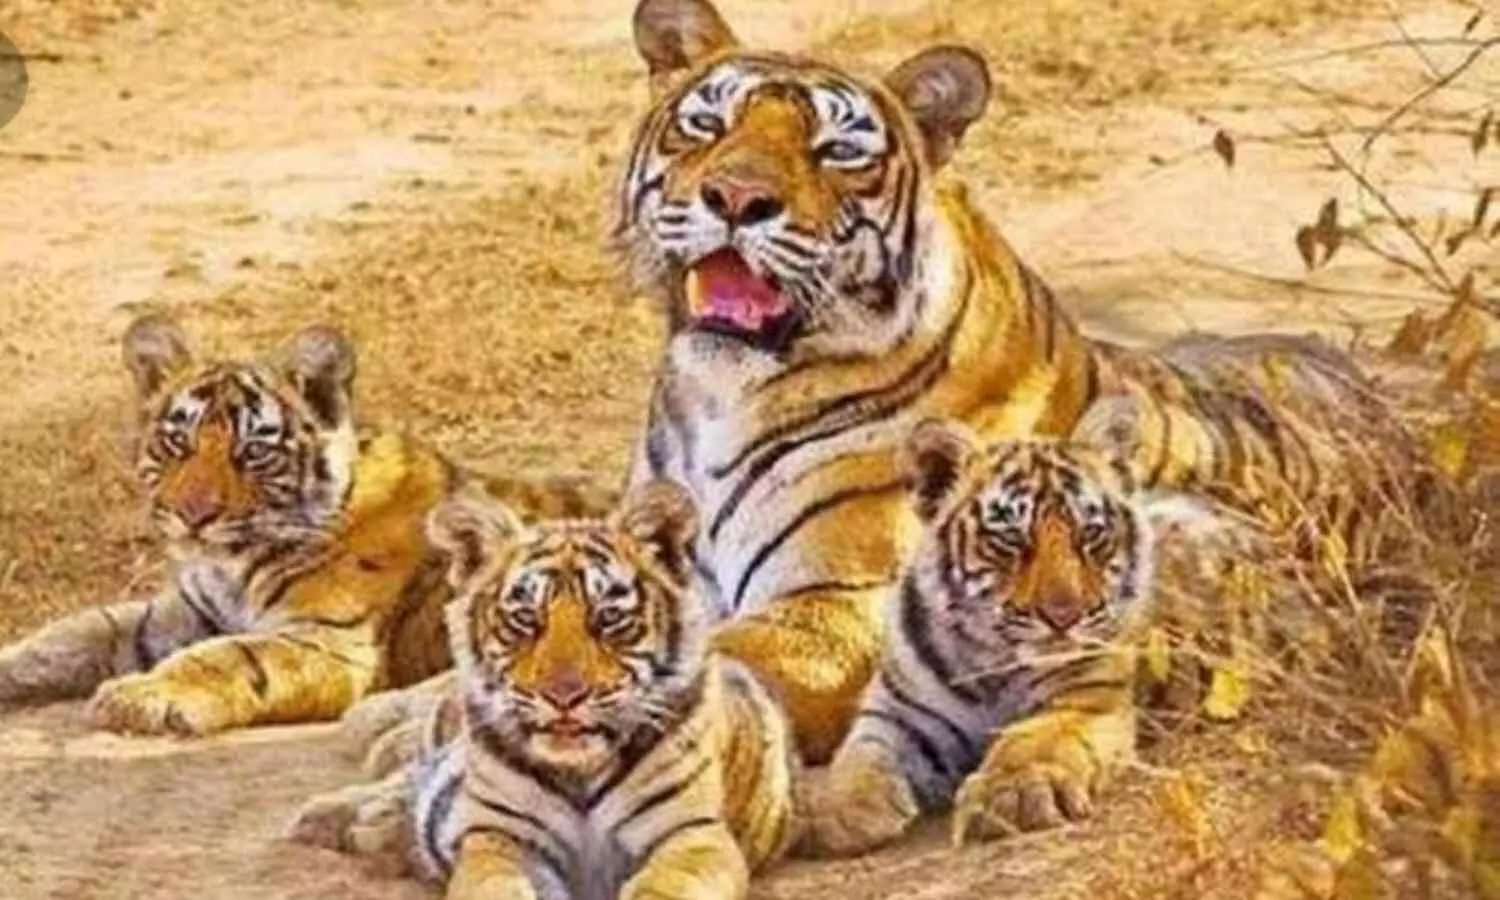 UP Ranipur Tiger Reserve